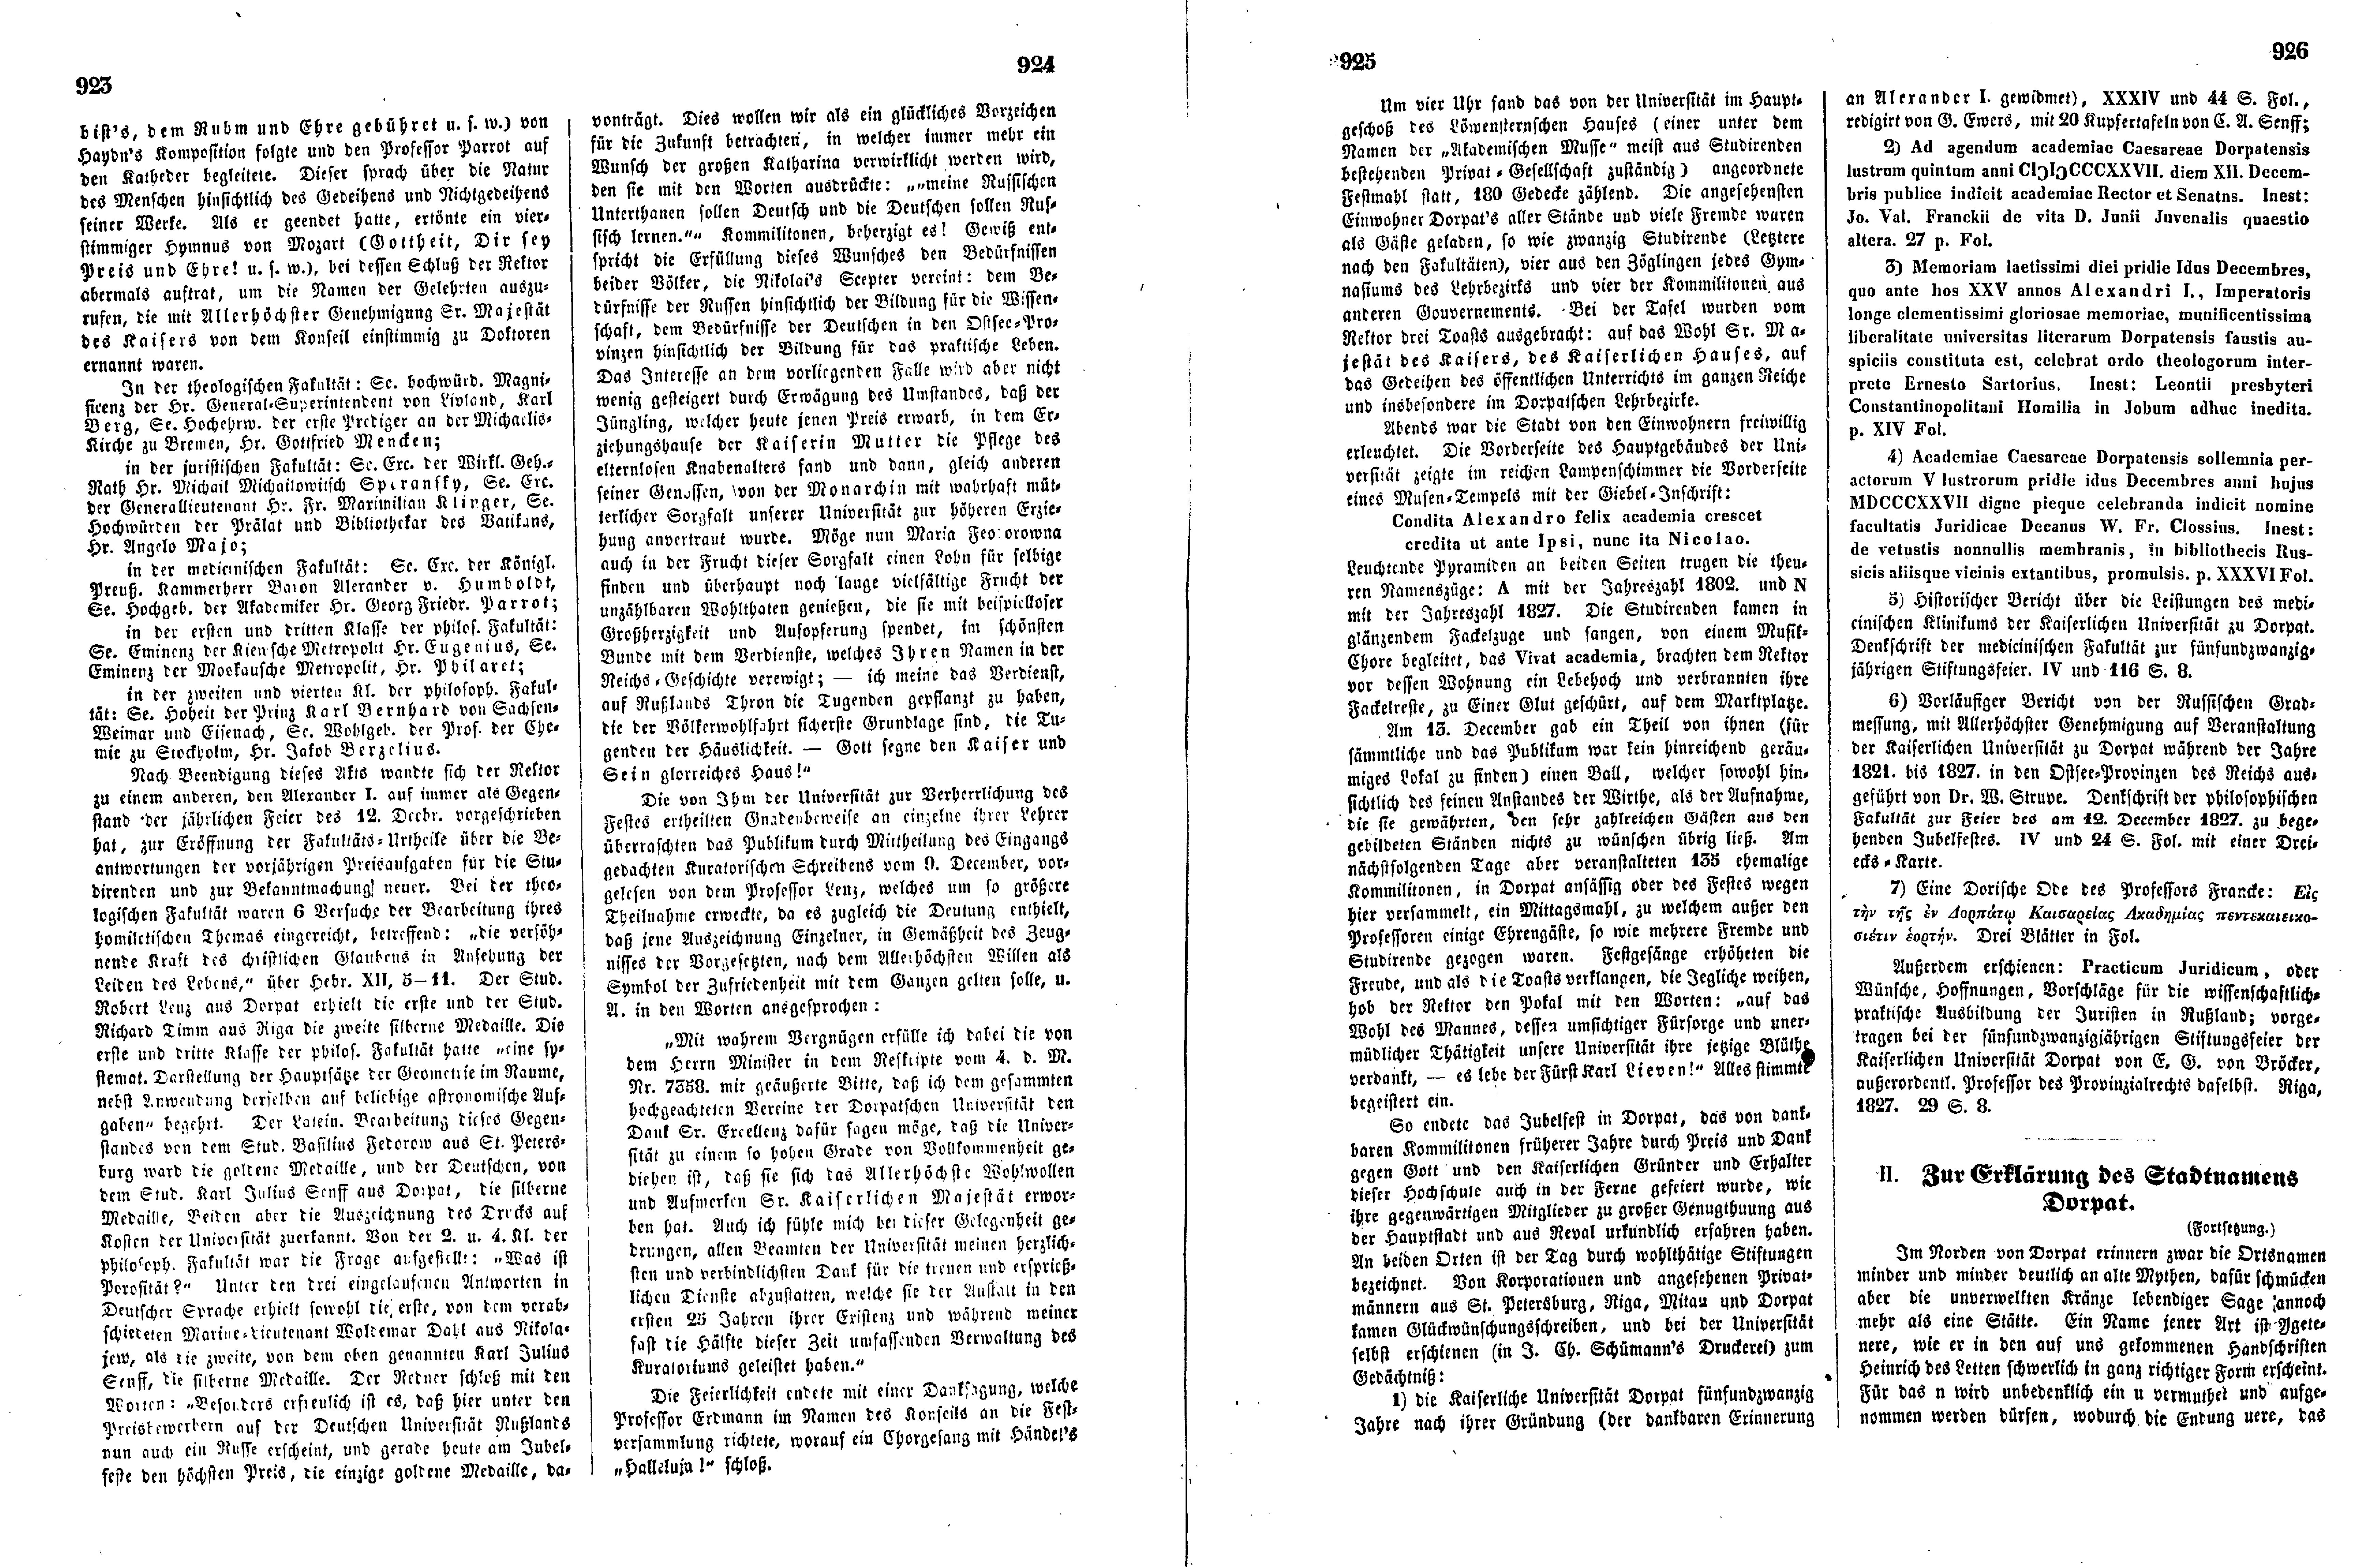 Das Inland [17] (1852) | 236. (923-926) Main body of text